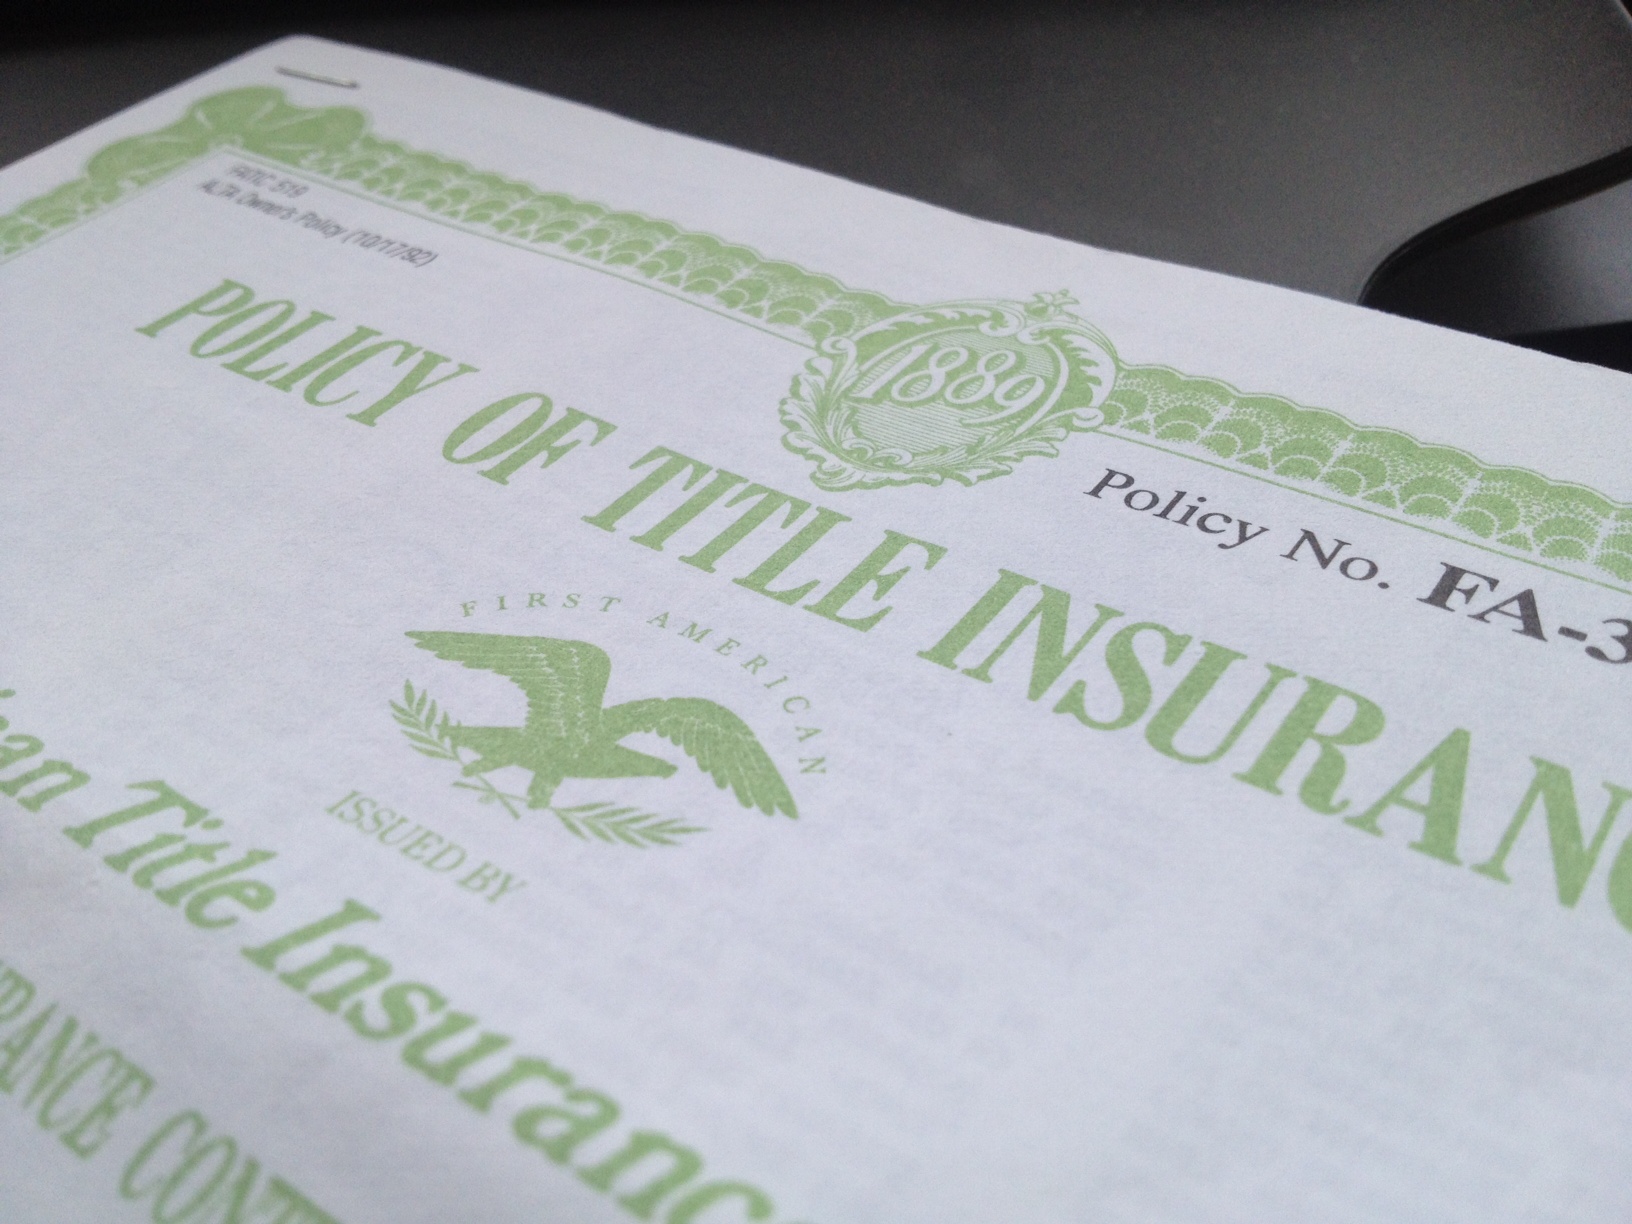 Title Insurance in Boca Raton